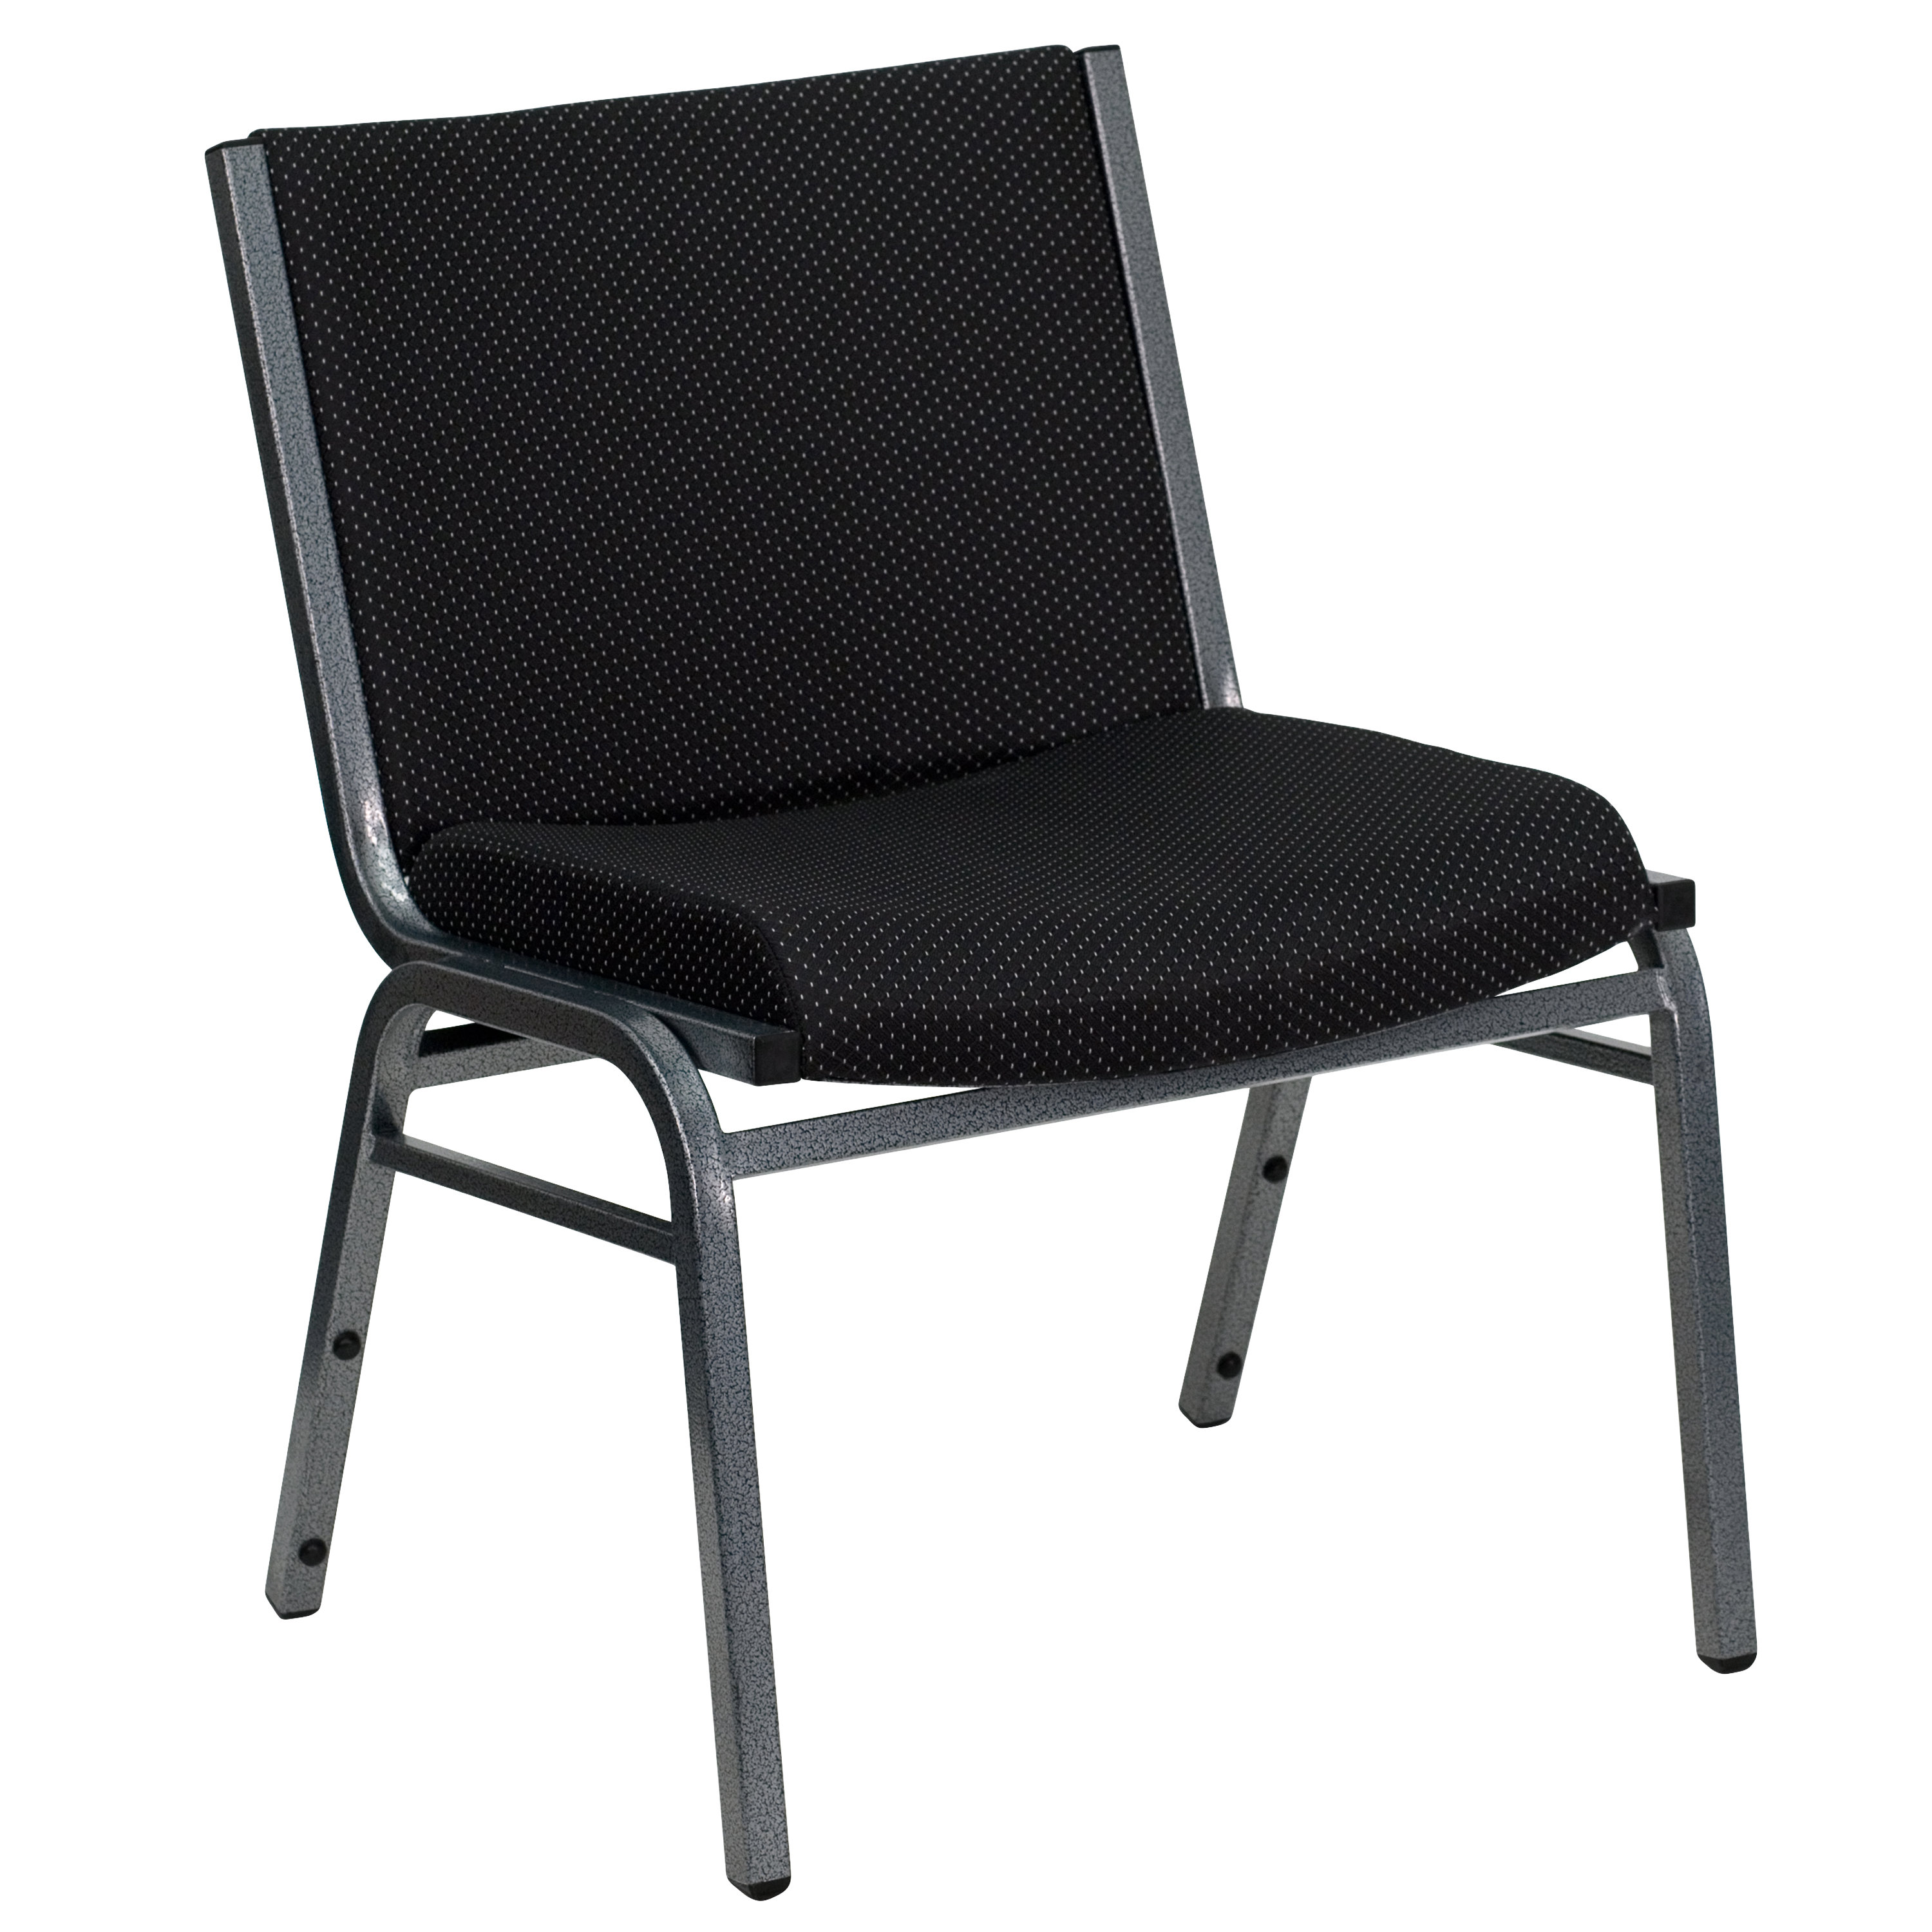 24-Hour-Rated Chair: 500-Pound Capacity, Armless, Vinyl